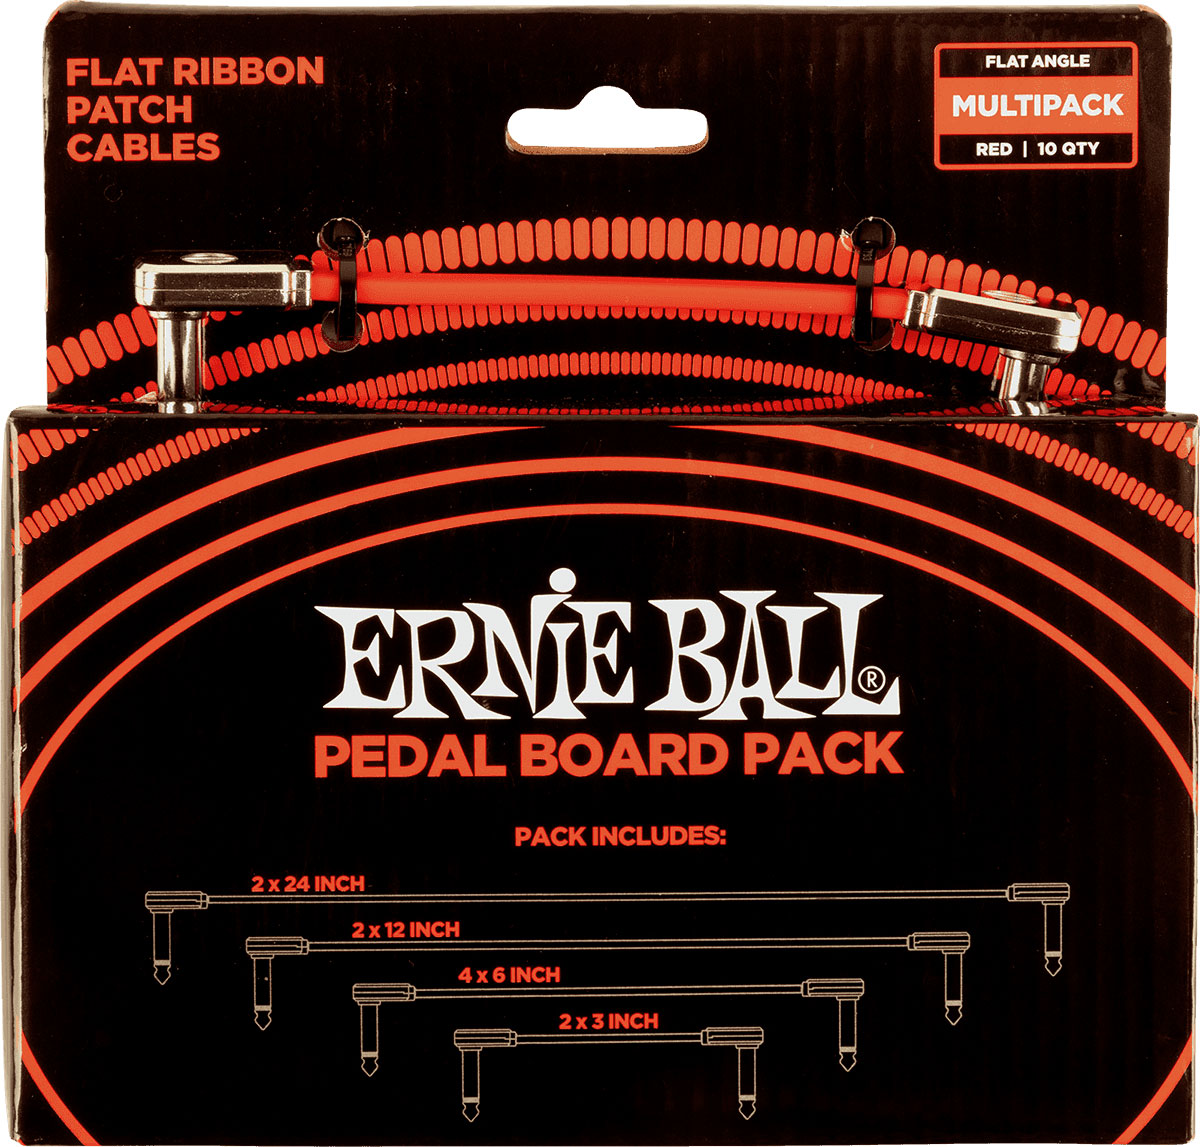 ERNIE BALL PEDALBOARD PACK - 10 PATCHES EN 4 LONGUEURS PANACHEES- COUDE FIN & PLAT - ROUGE